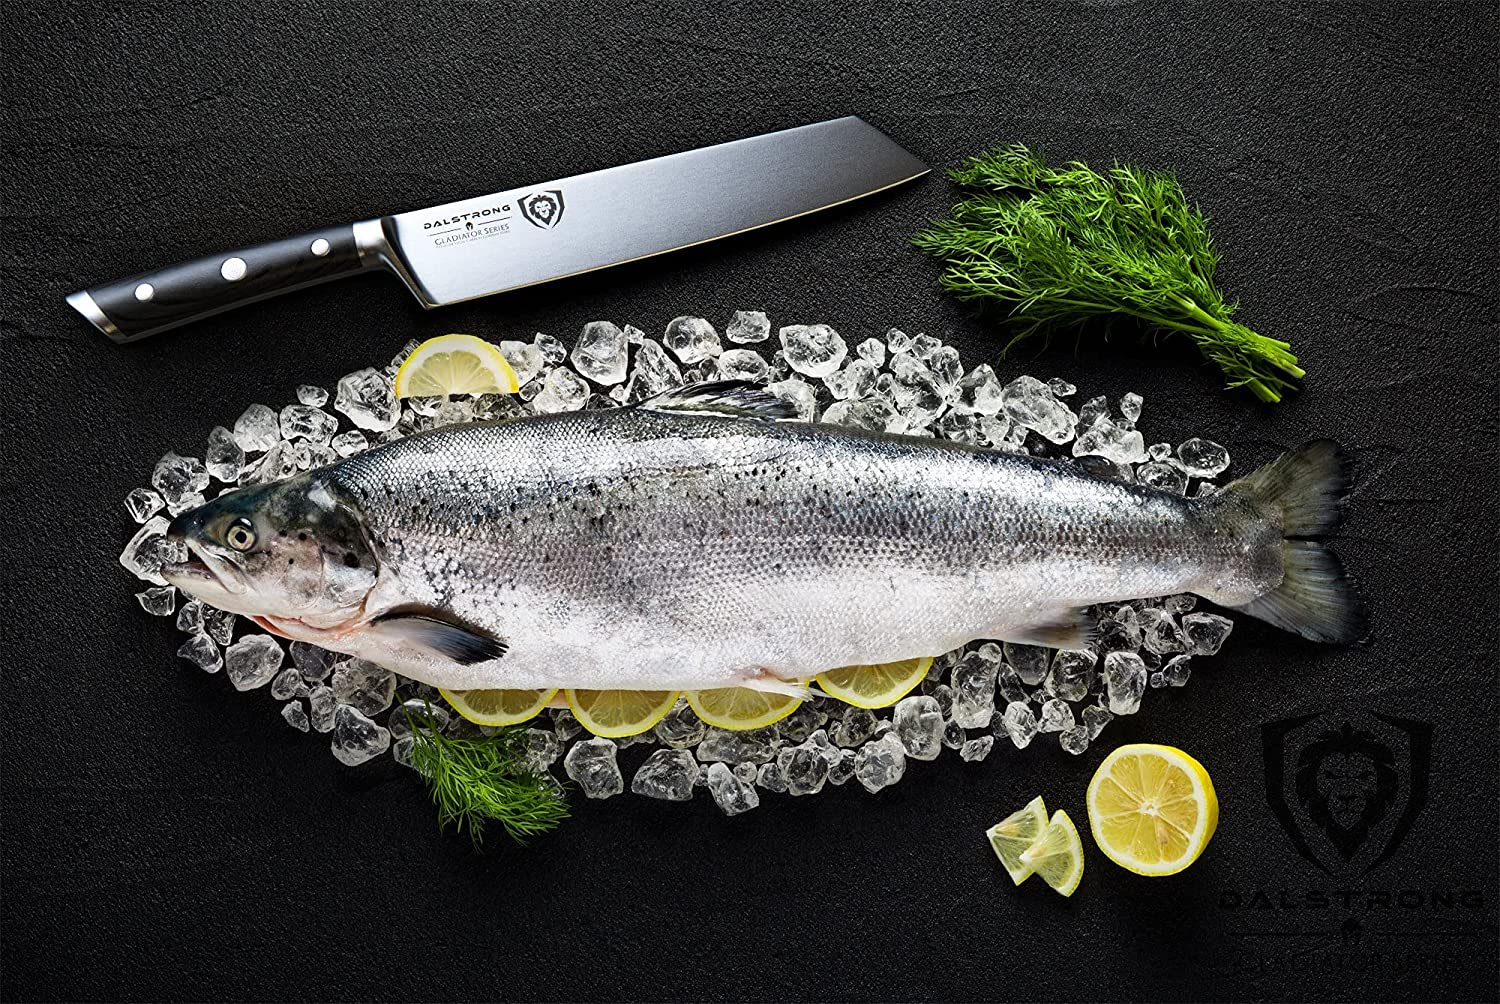 Best left-handed kiritsuke knife- DALSTRONG Chef Knife cutting fish